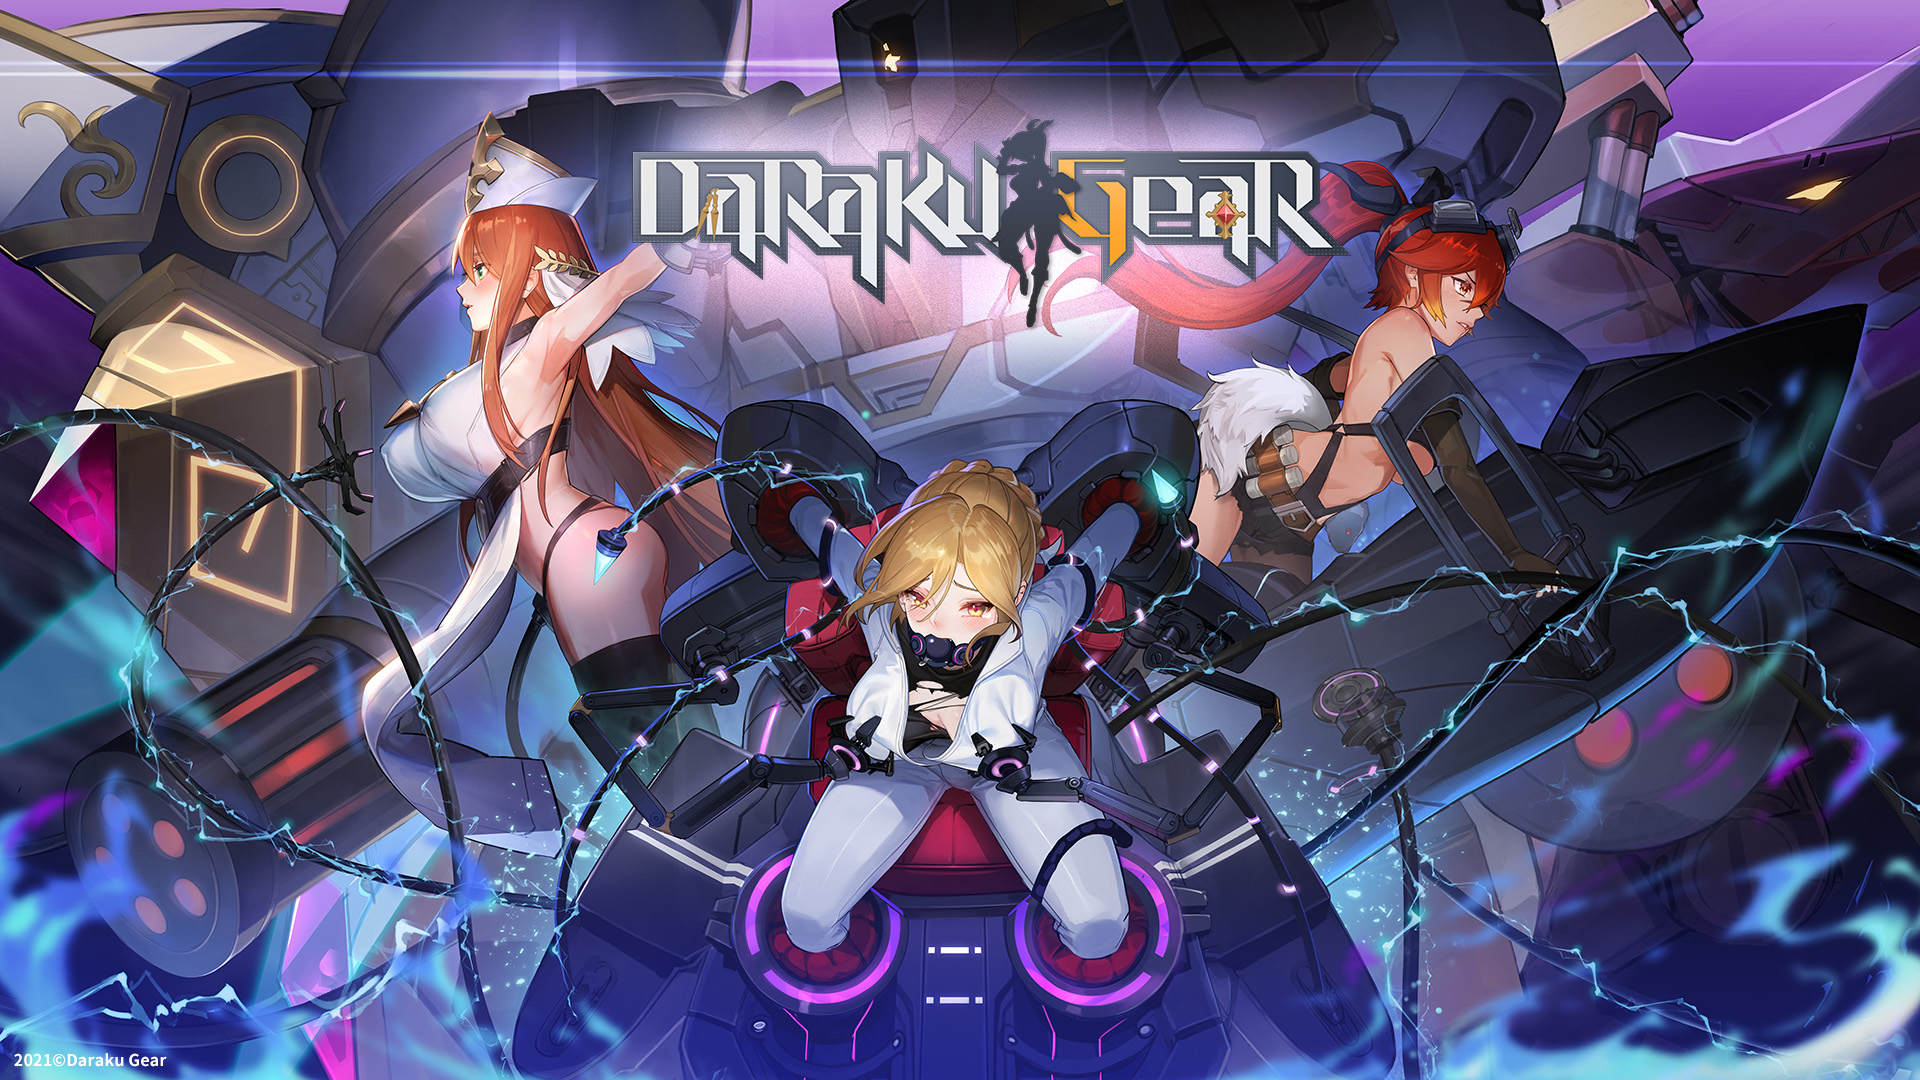 Daraku Gear - RPG Sex Game with APK file | Nutaku